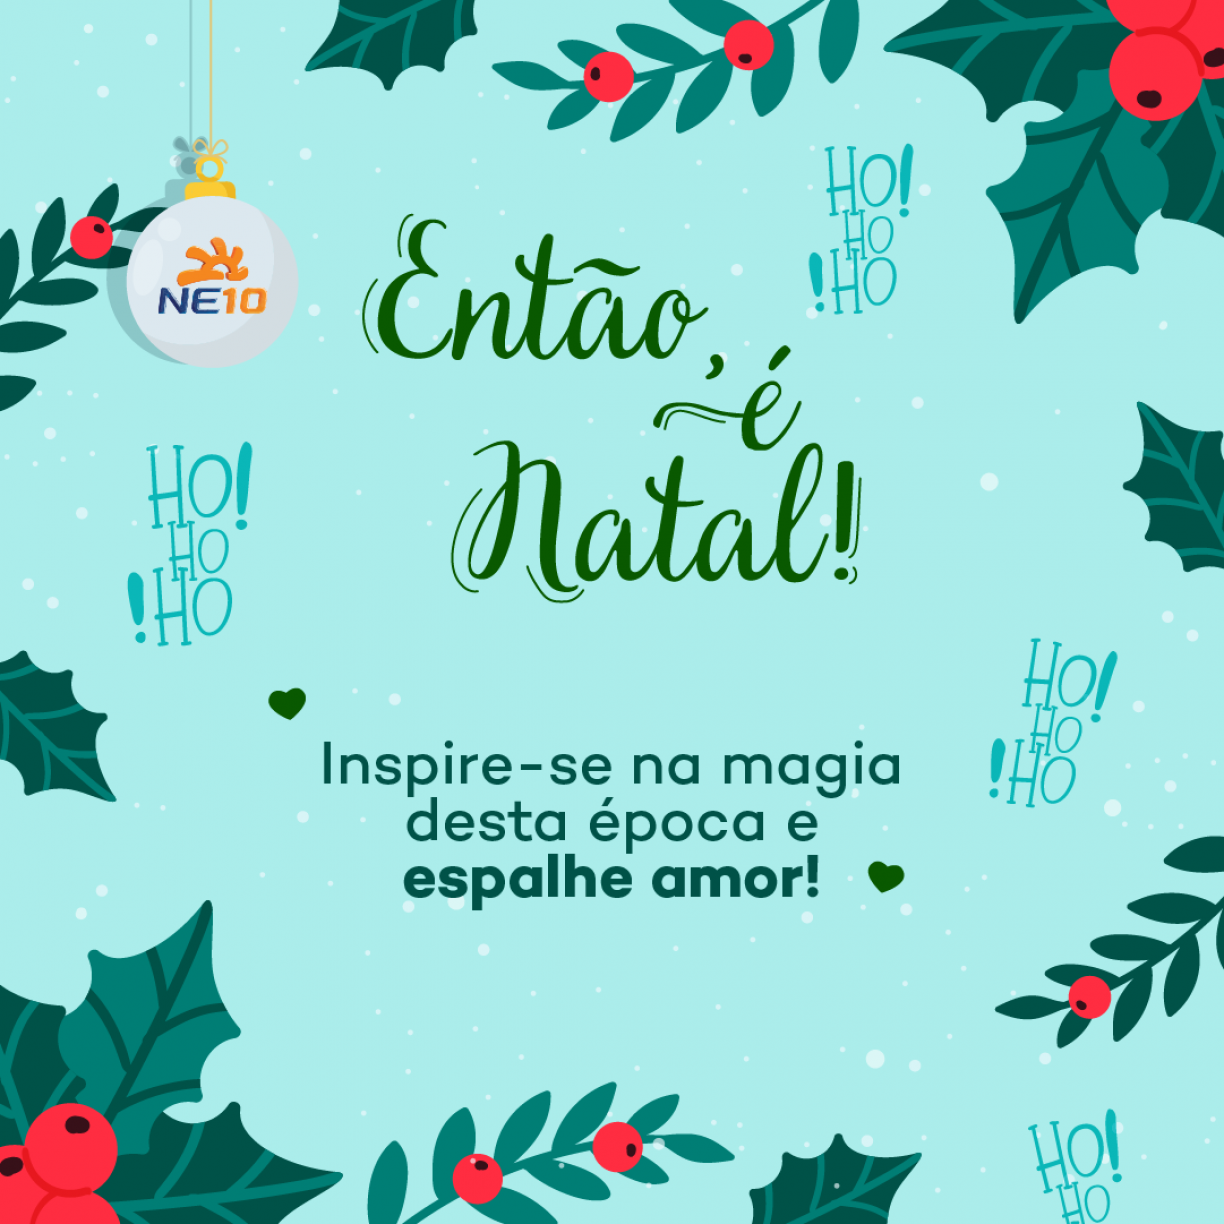 MENSAGENS DE VÉSPERA DE NATAL: melhores frases para enviar no Natal